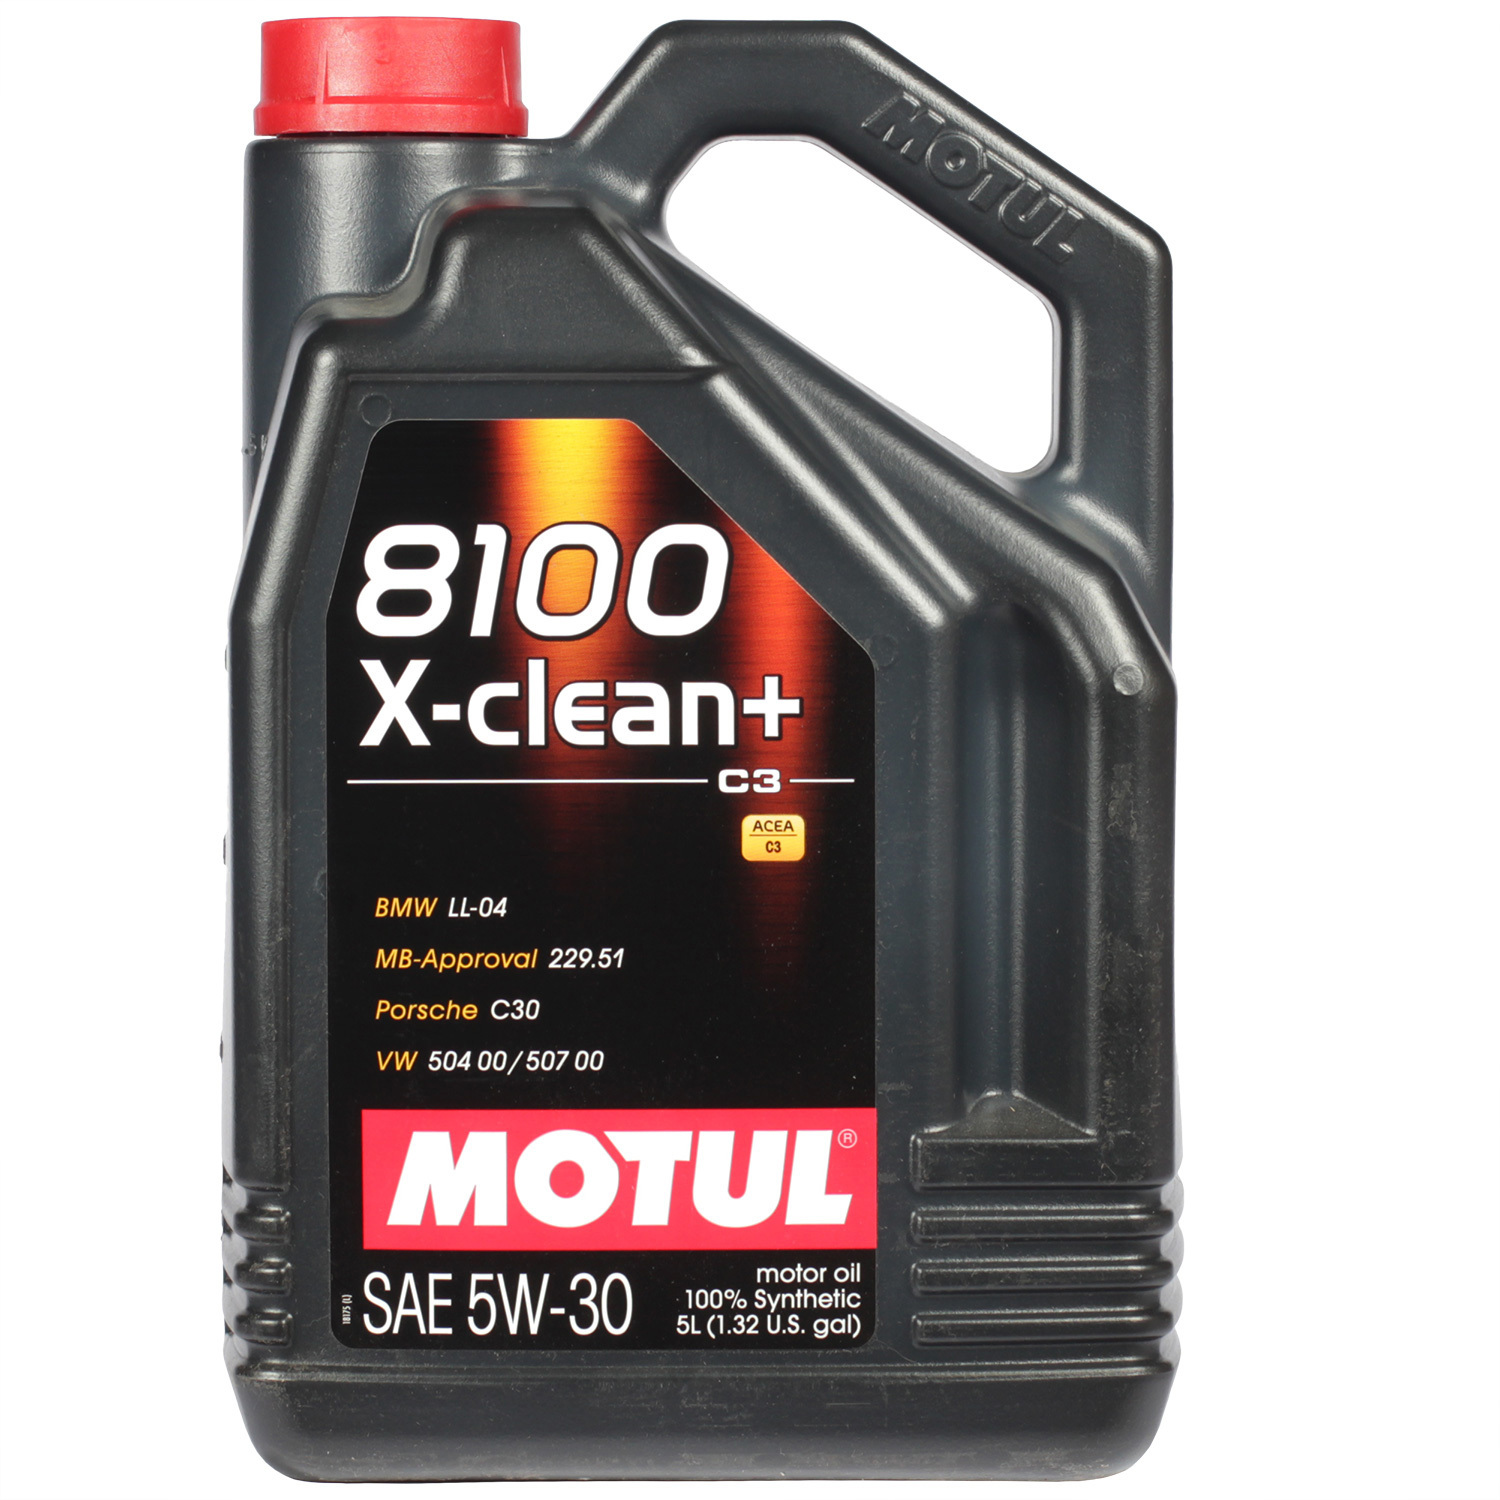 Motul Моторное масло Motul 8100 X-clean+ 5W-30, 5 л масло моторное motul 8100 x cess 5w 30 5 л 108946